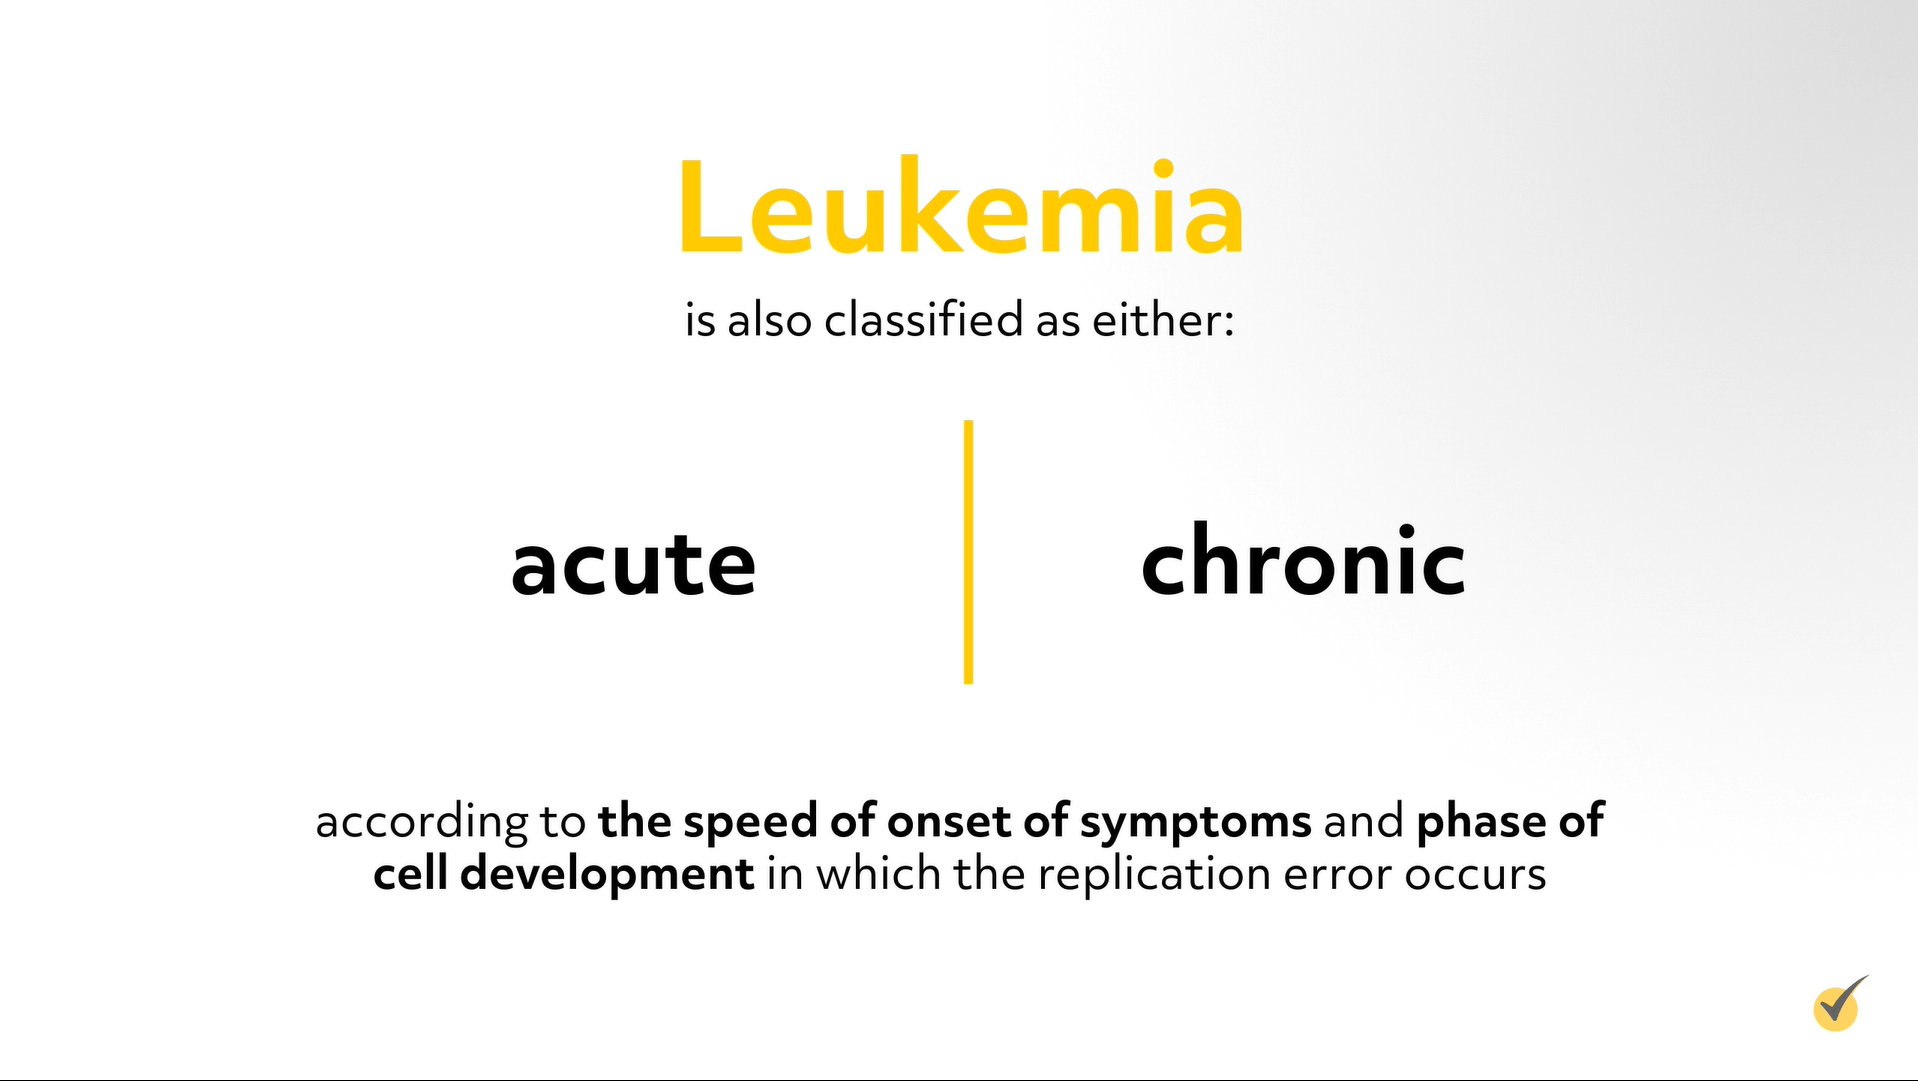 acute vs chronic leukemia